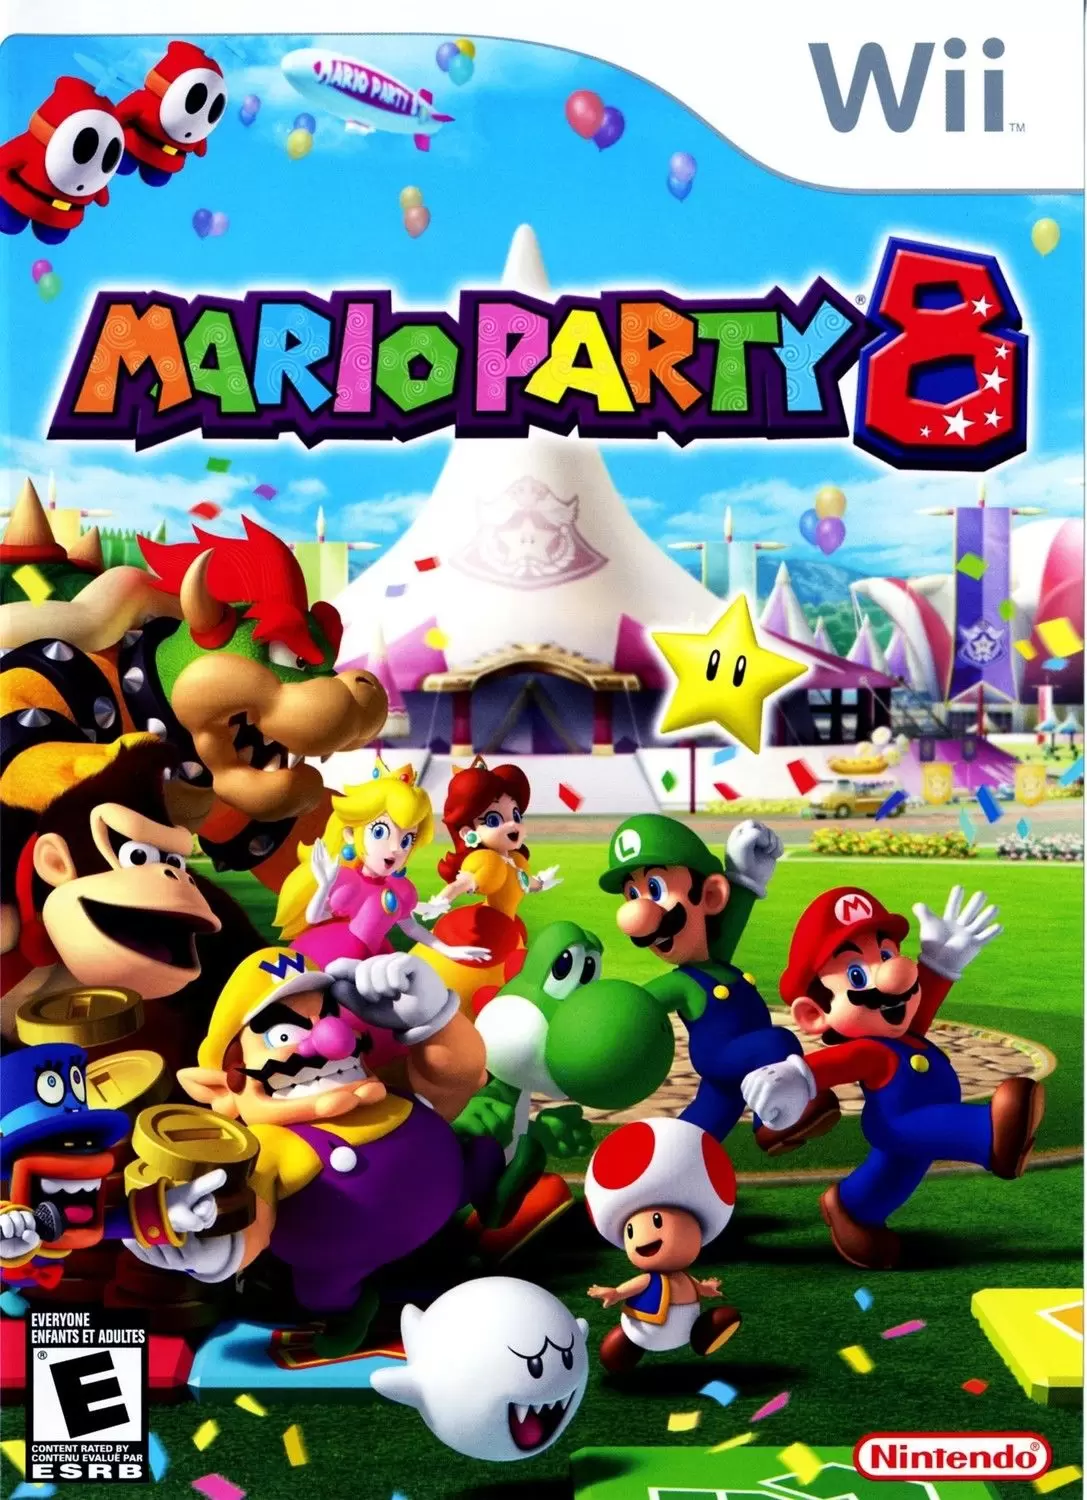 Jeux Nintendo Wii - Mario Party 8